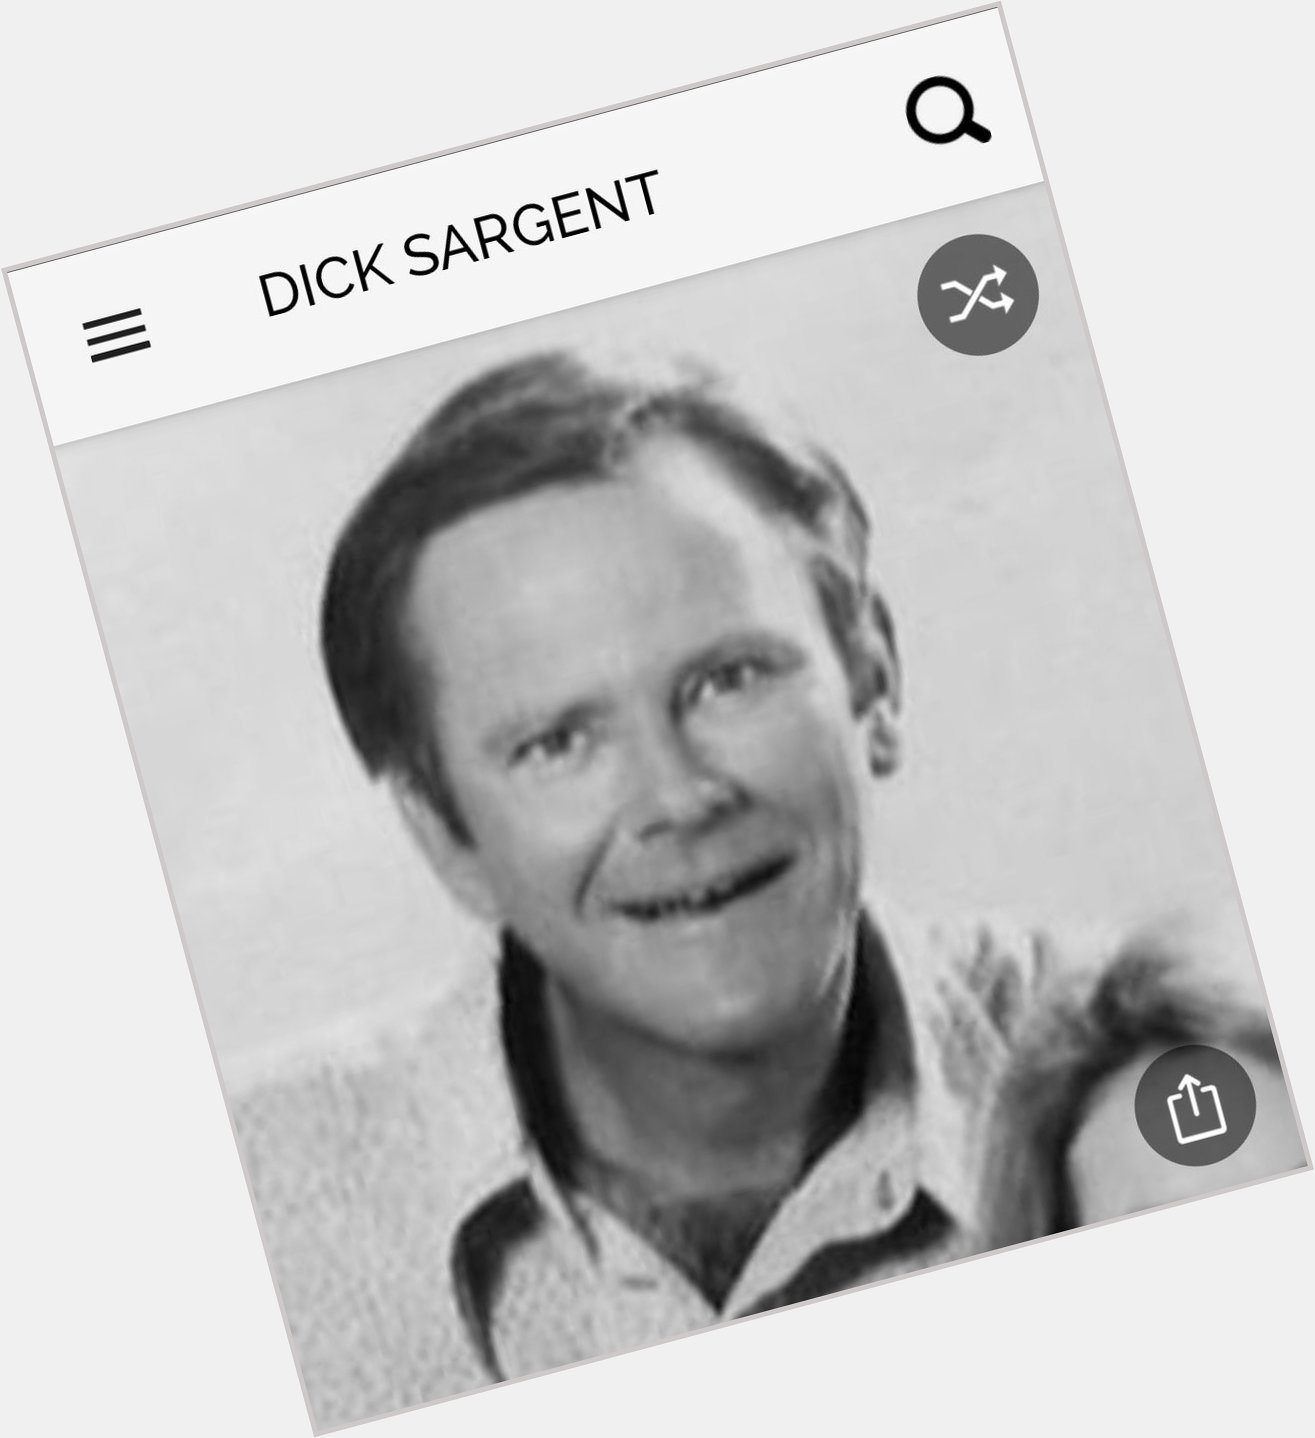 Happy Birthday to this iconic actor.  Happy Birthday to Dick Sargent 